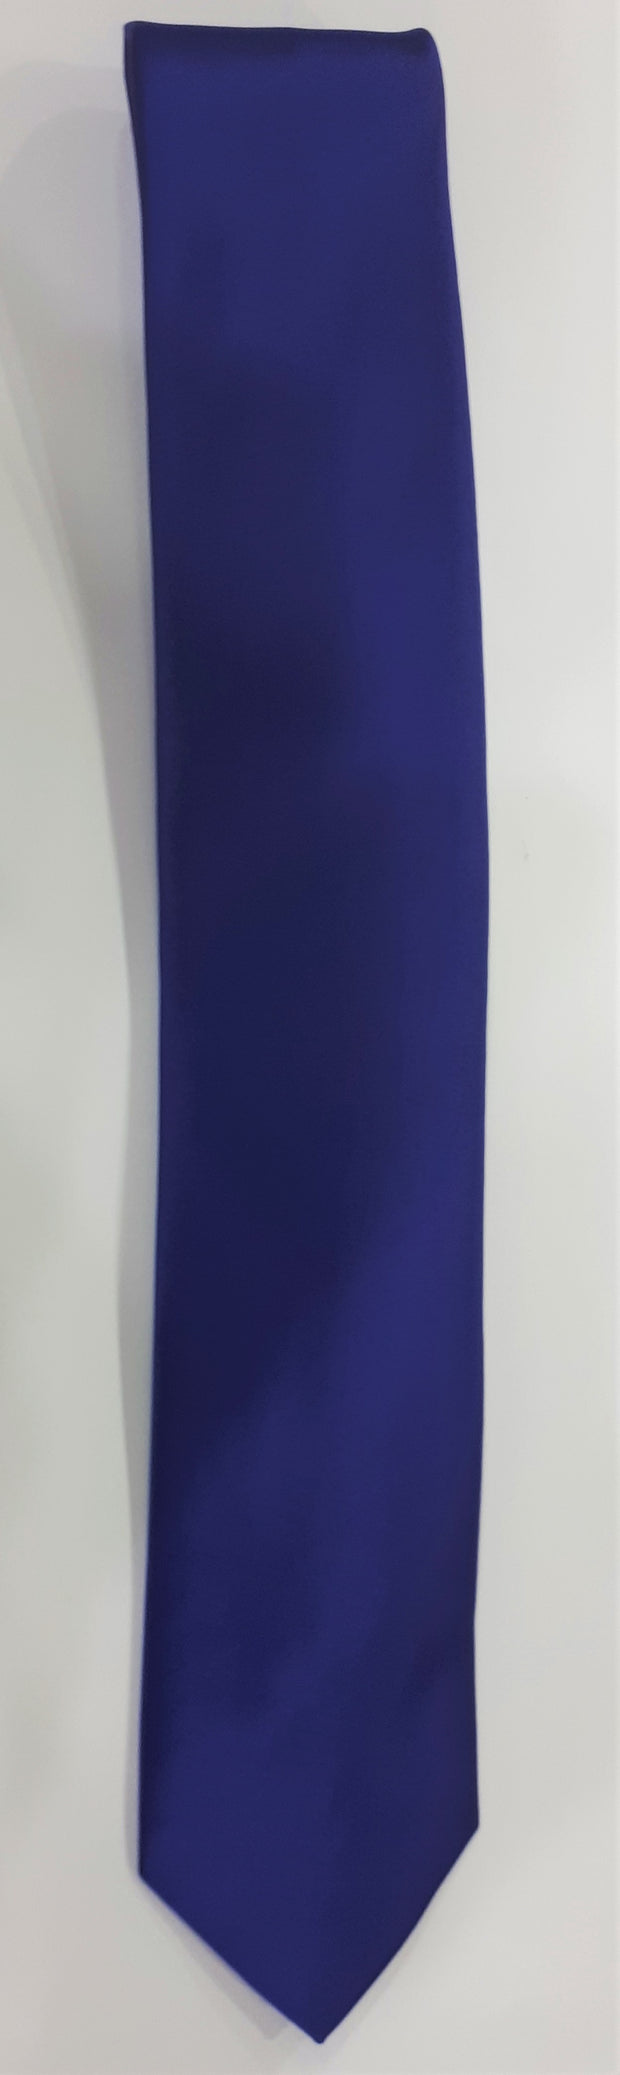 formal satin tie purple